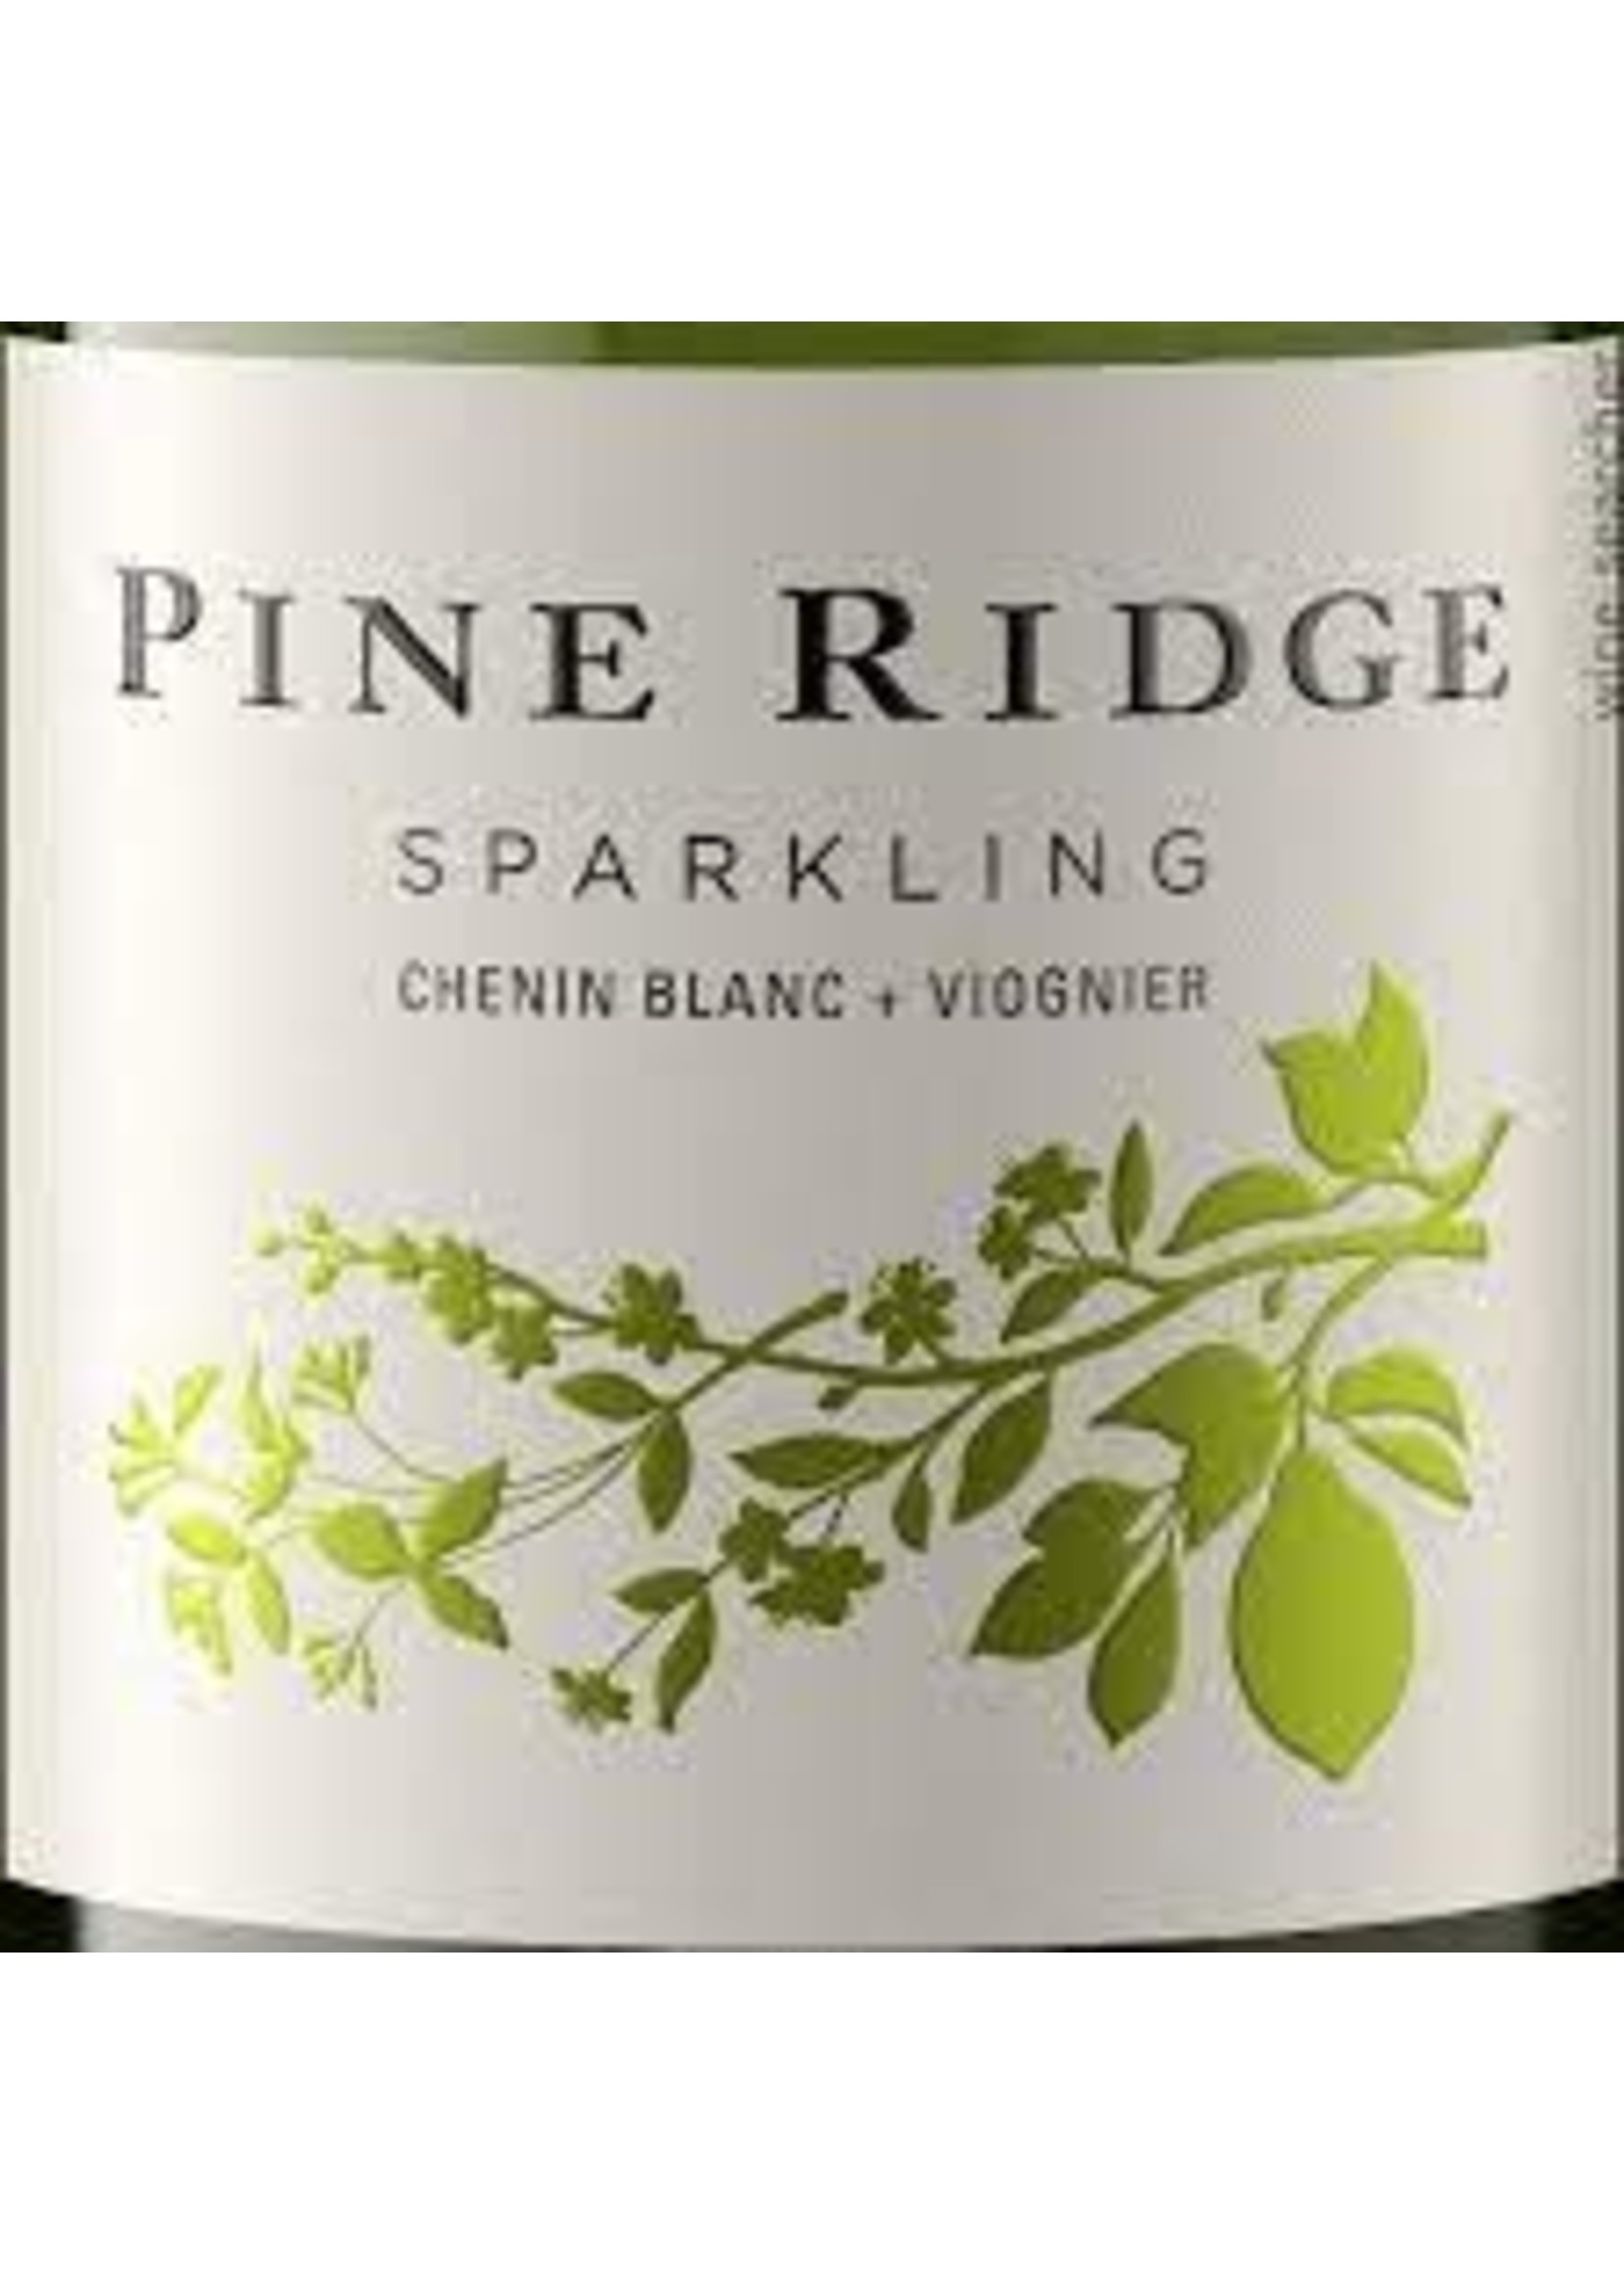 Pine Ridge Sparkling Chenin Blanc + Viognier 750ml